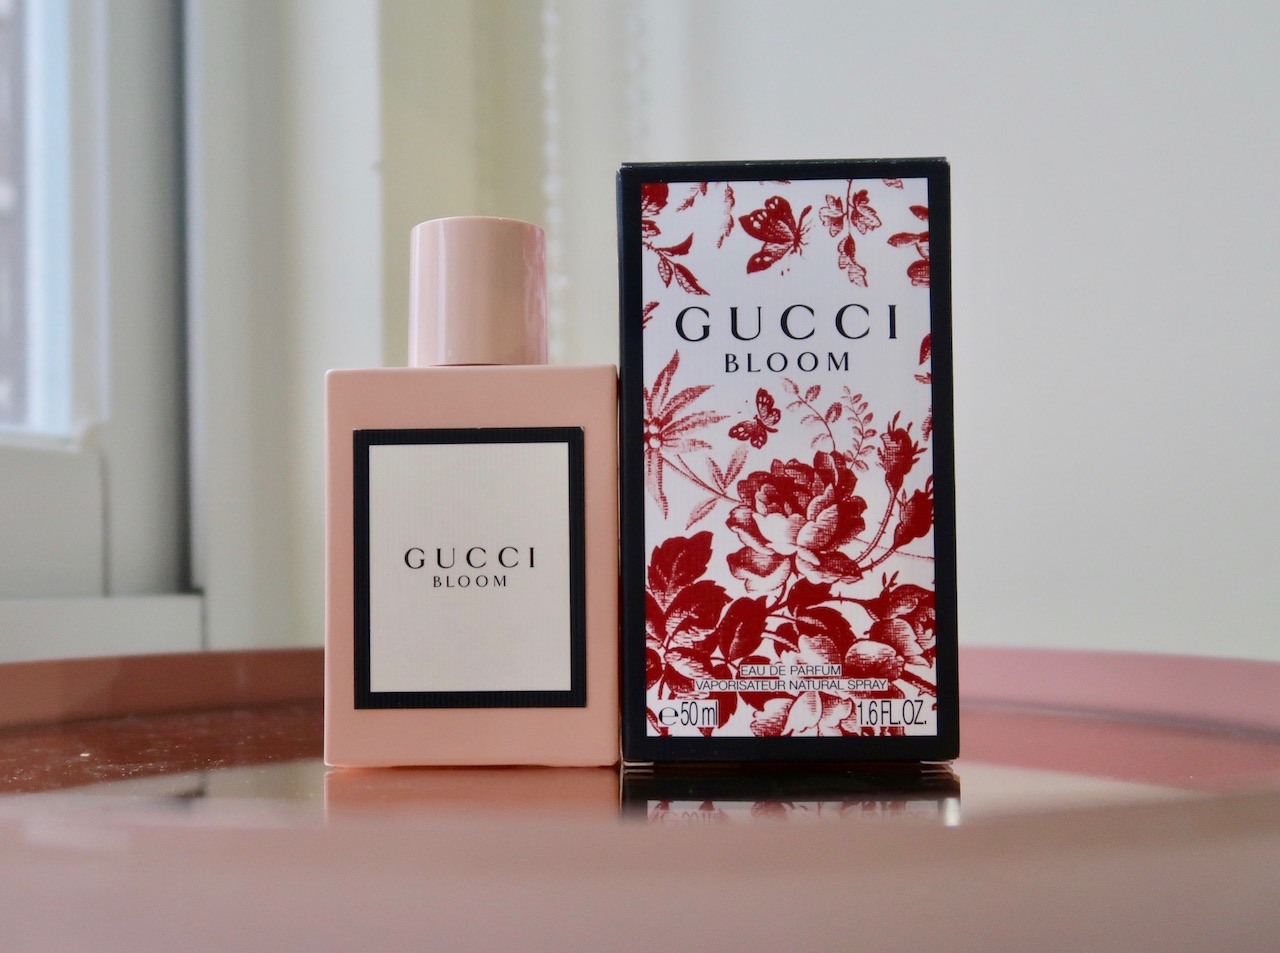 bloom gucci perfume